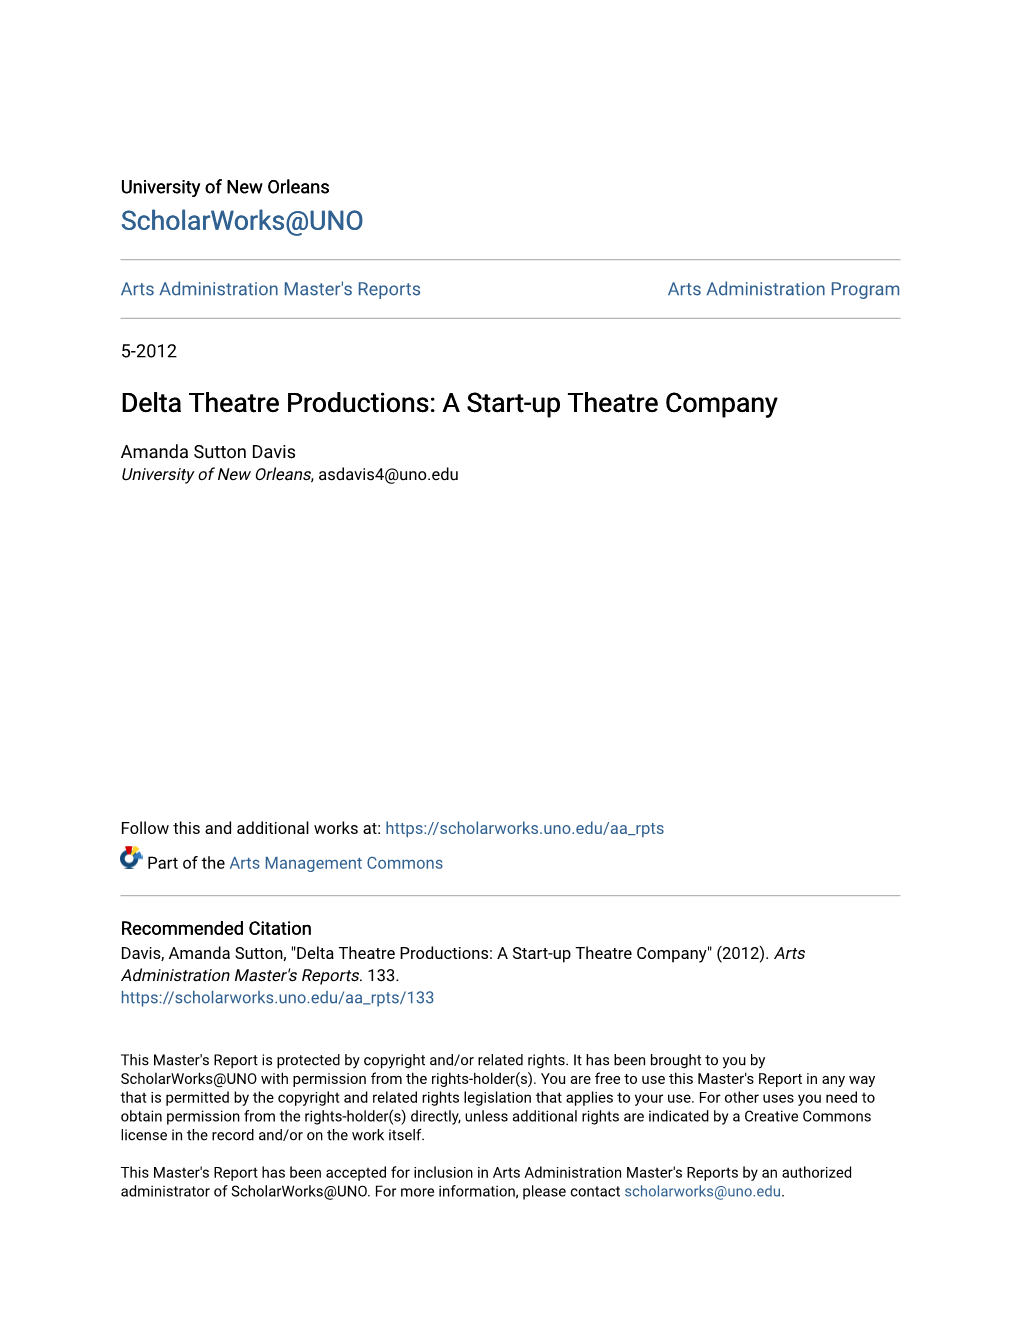 Delta Theatre Productions: a Start-Up Theatre Company